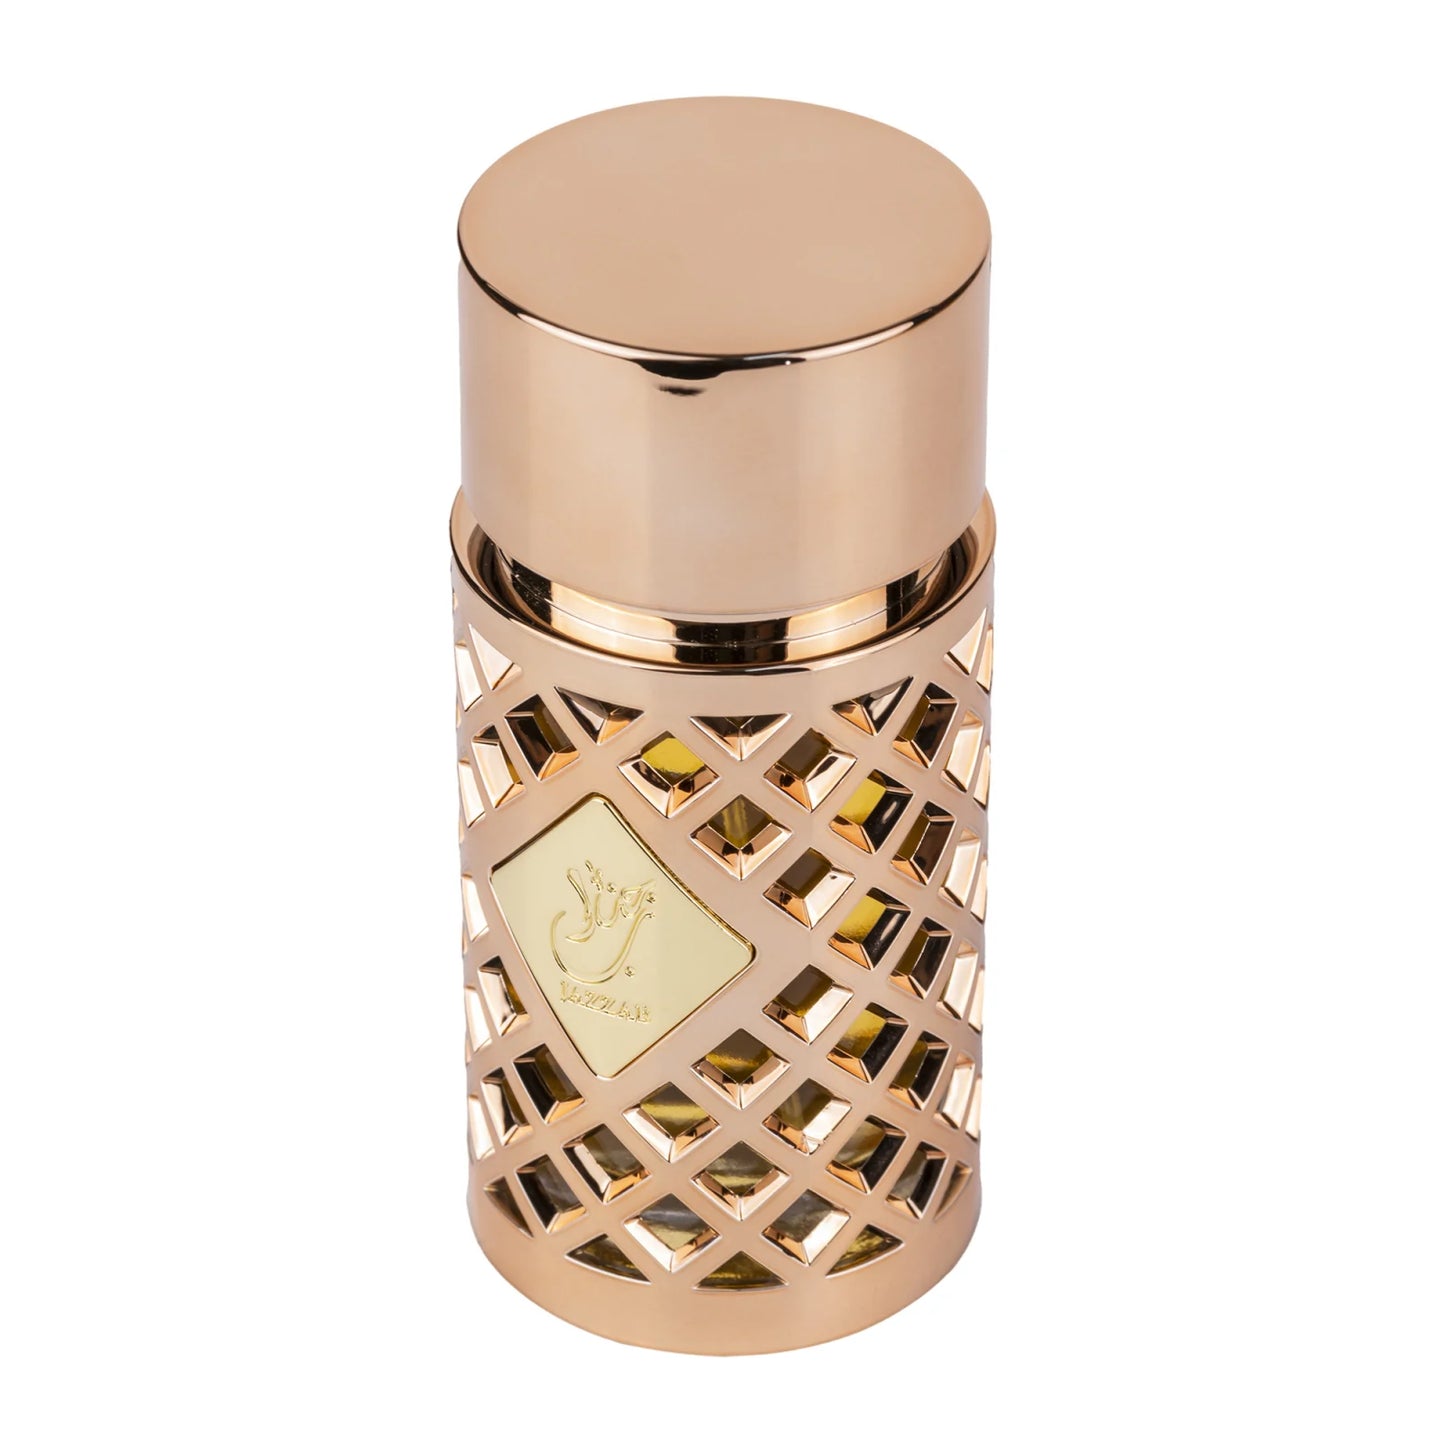 Parfum arabesc Jazzab Gold, Ard Al Zaafaran, apa de pafum 100 ml, femei